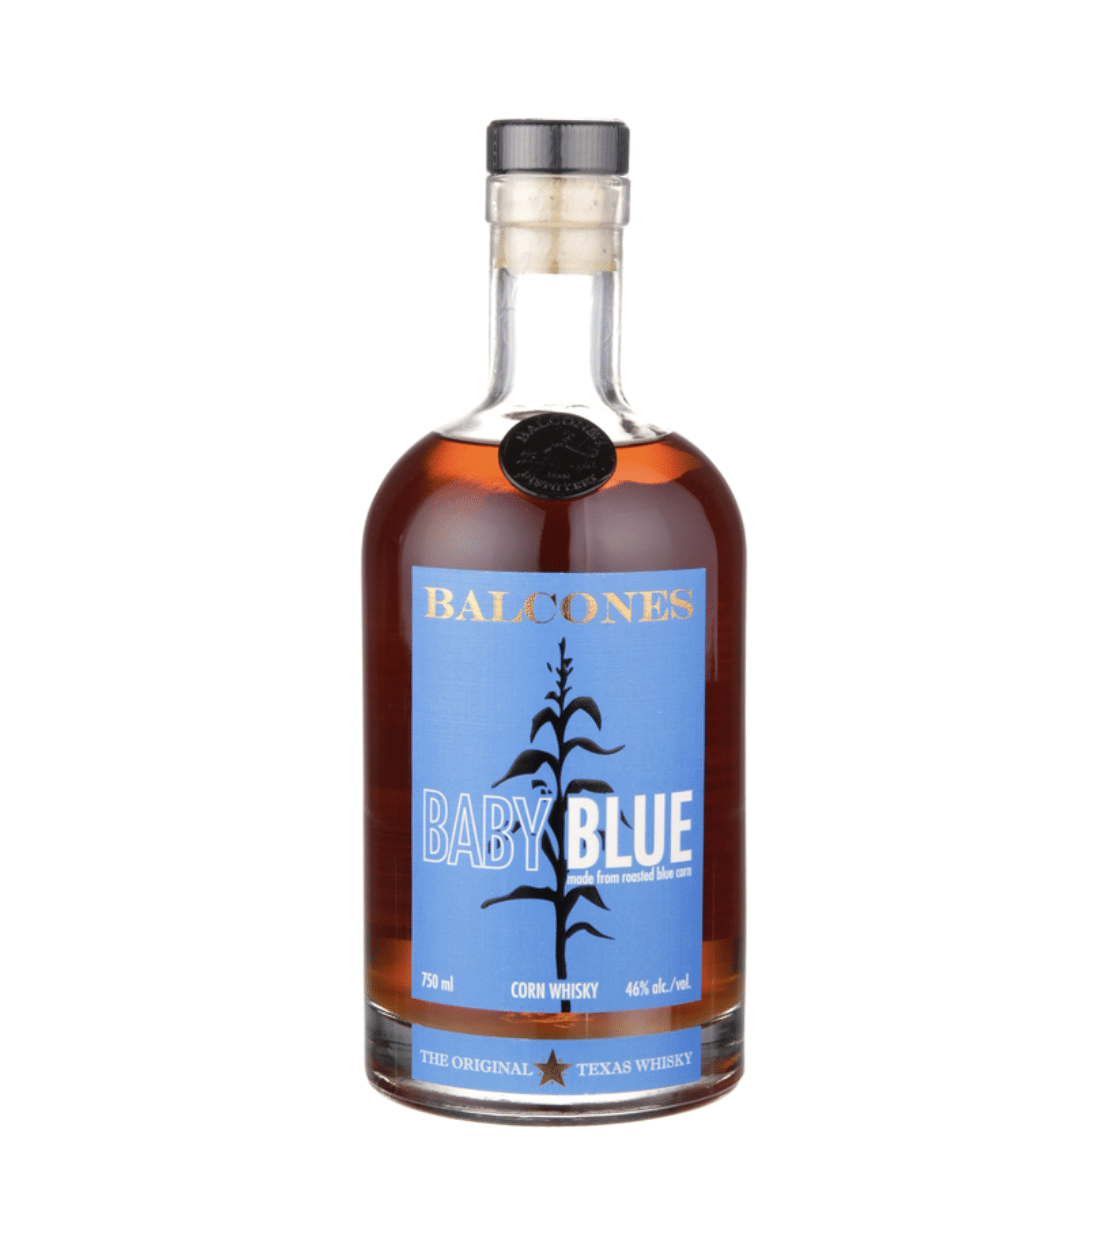 Balcones Baby Blue Corn Whisky - Barbank